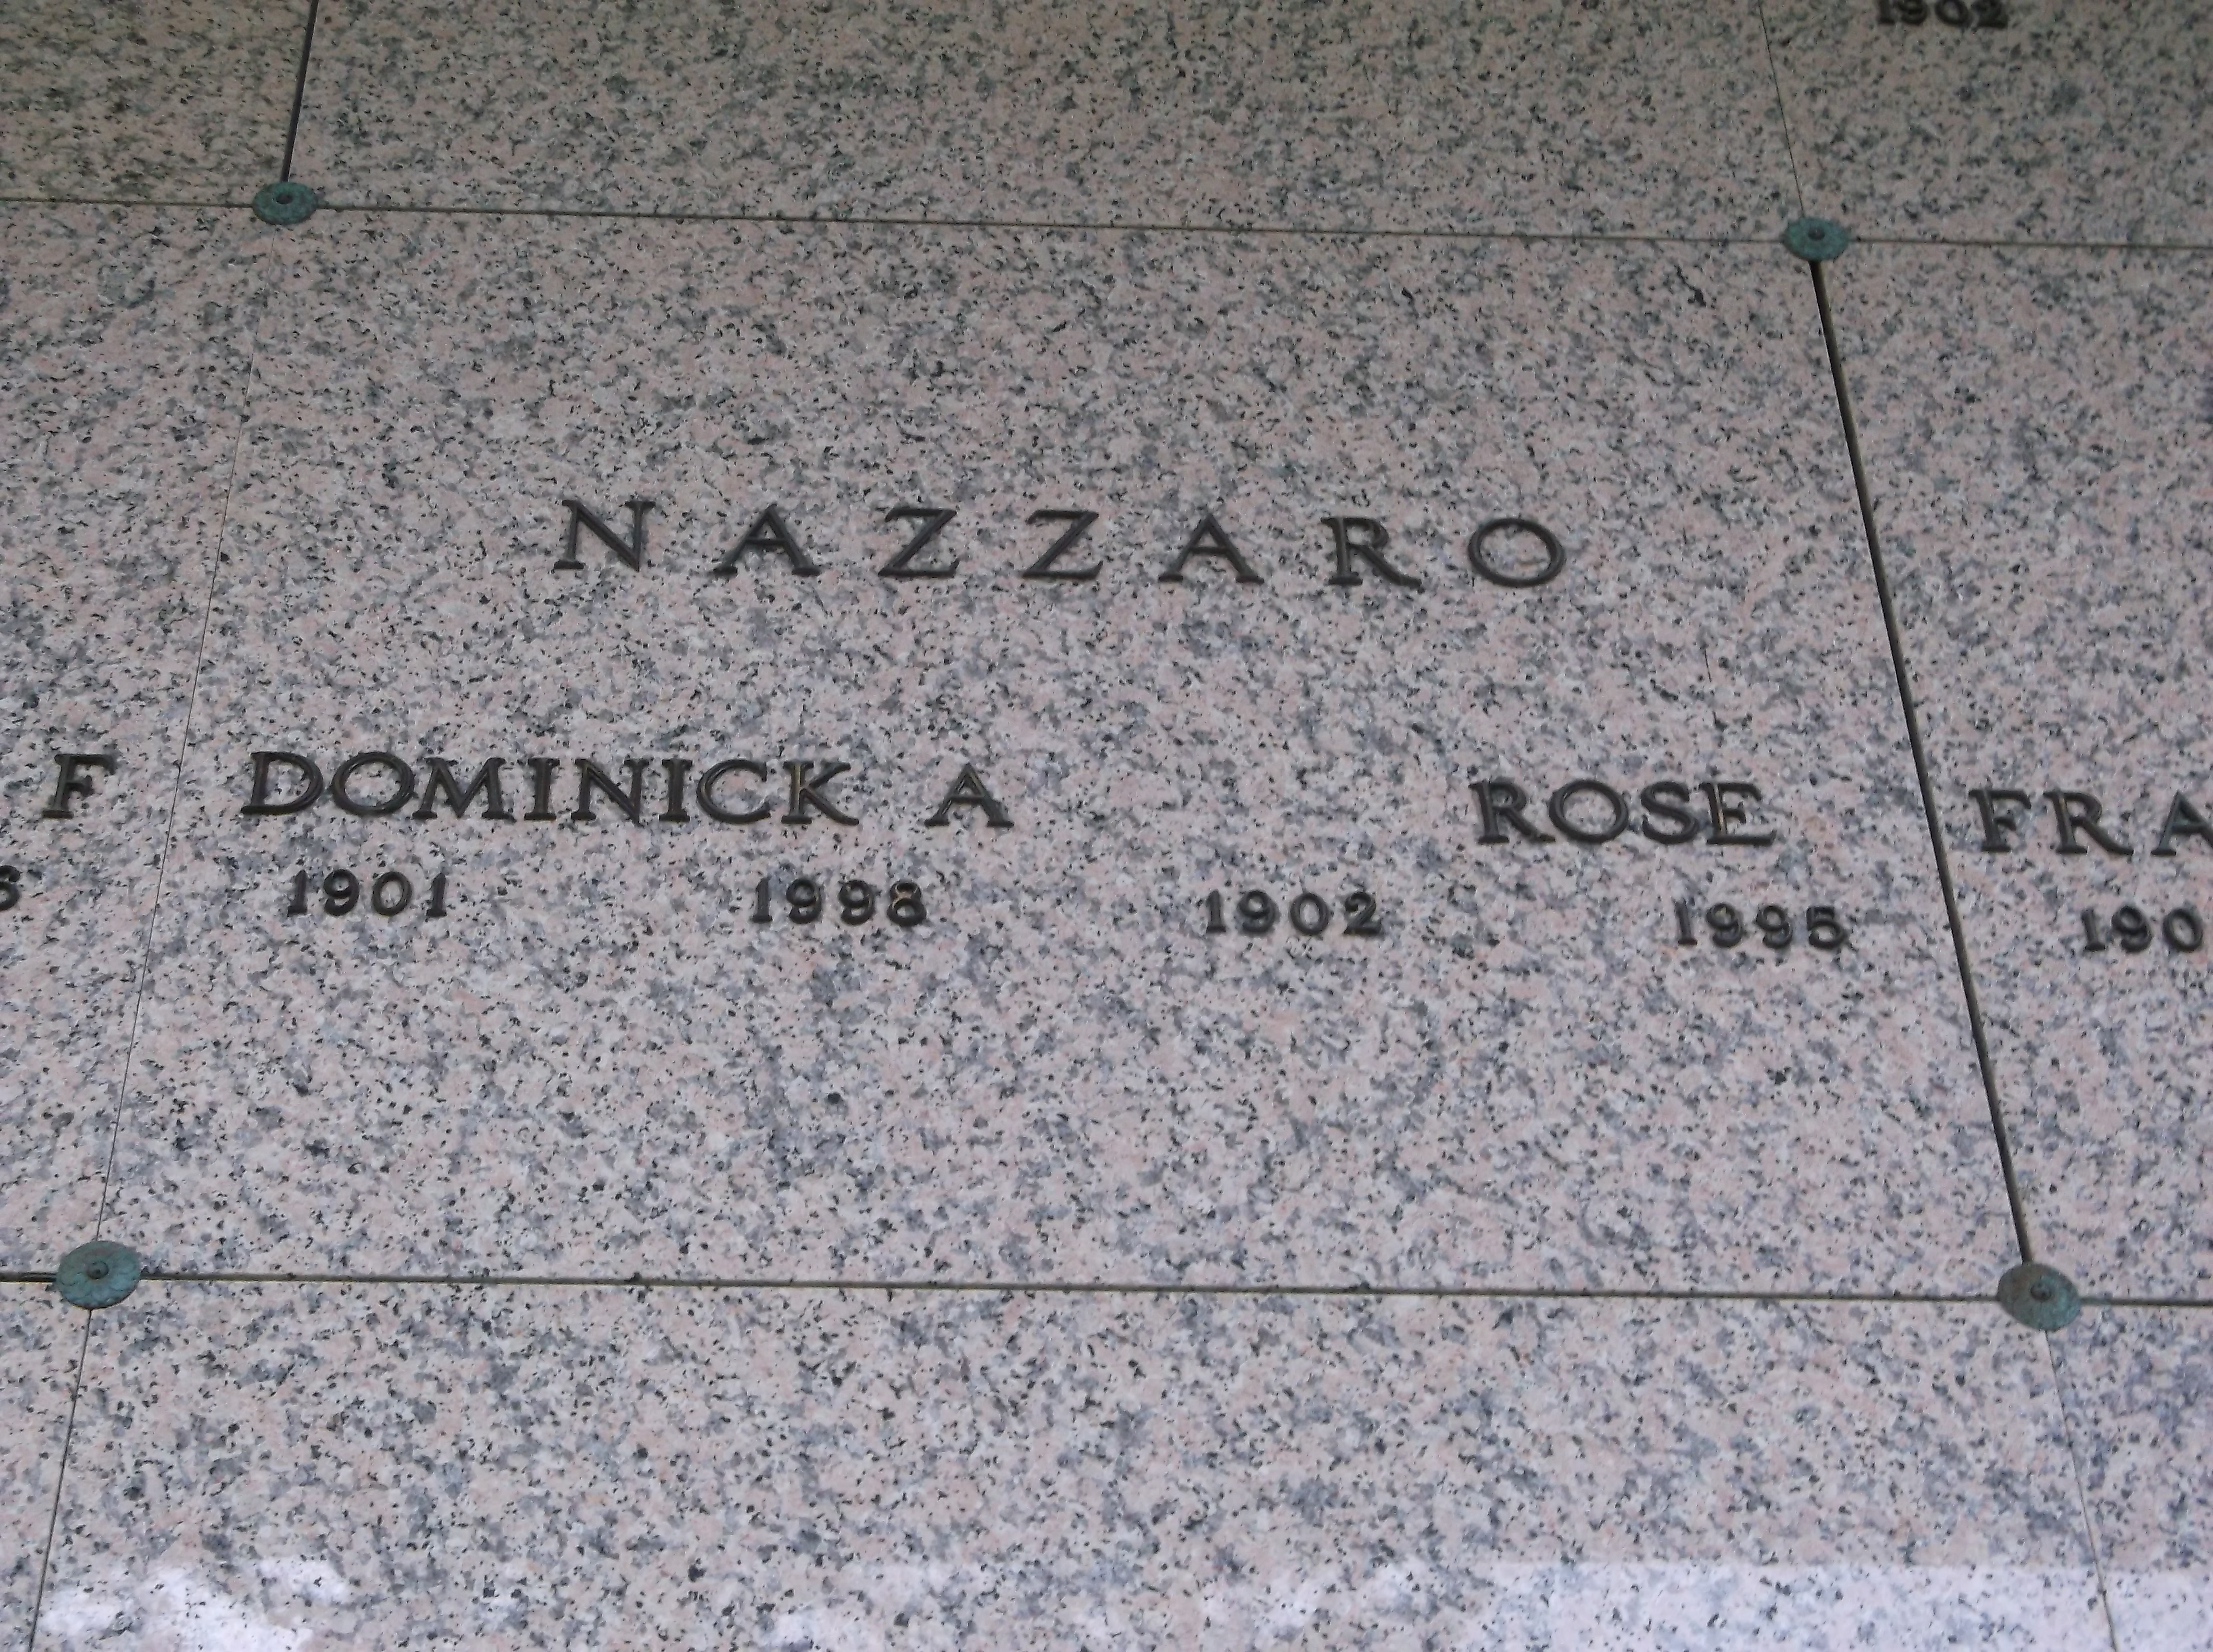 Dominick A Nazzaro